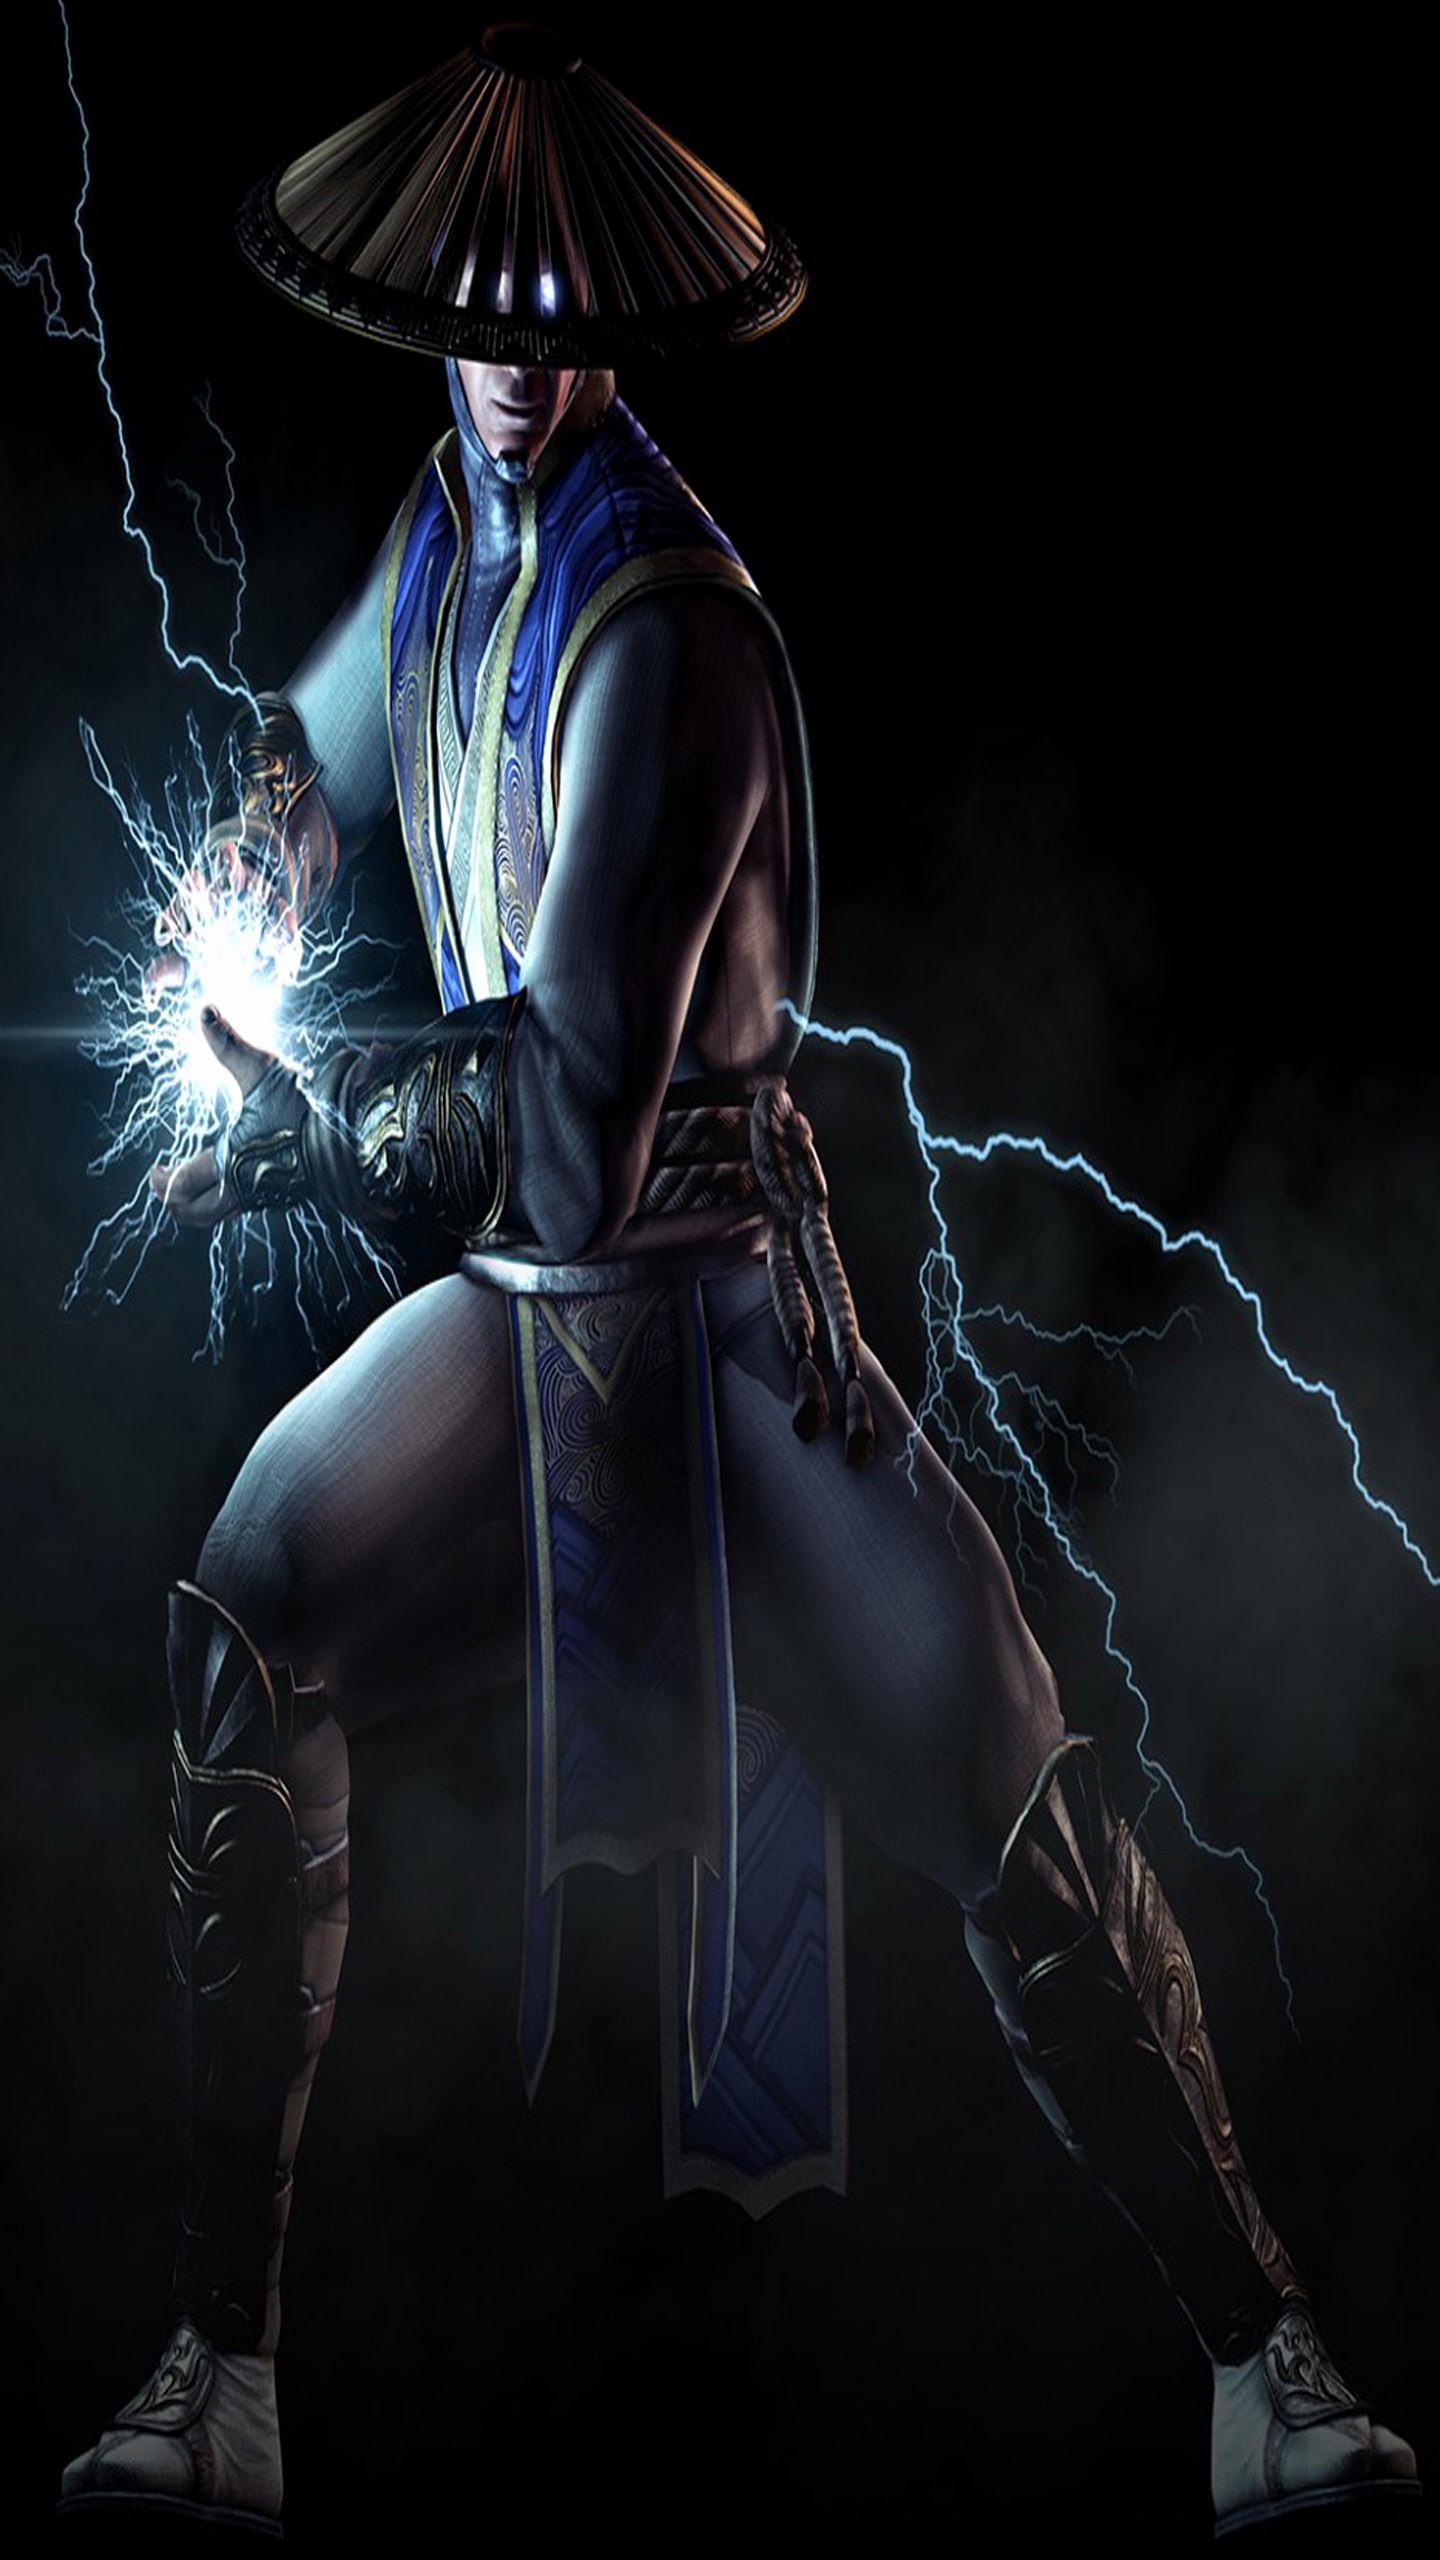 Mortal Kombat X Raiden Wallpaper background picture